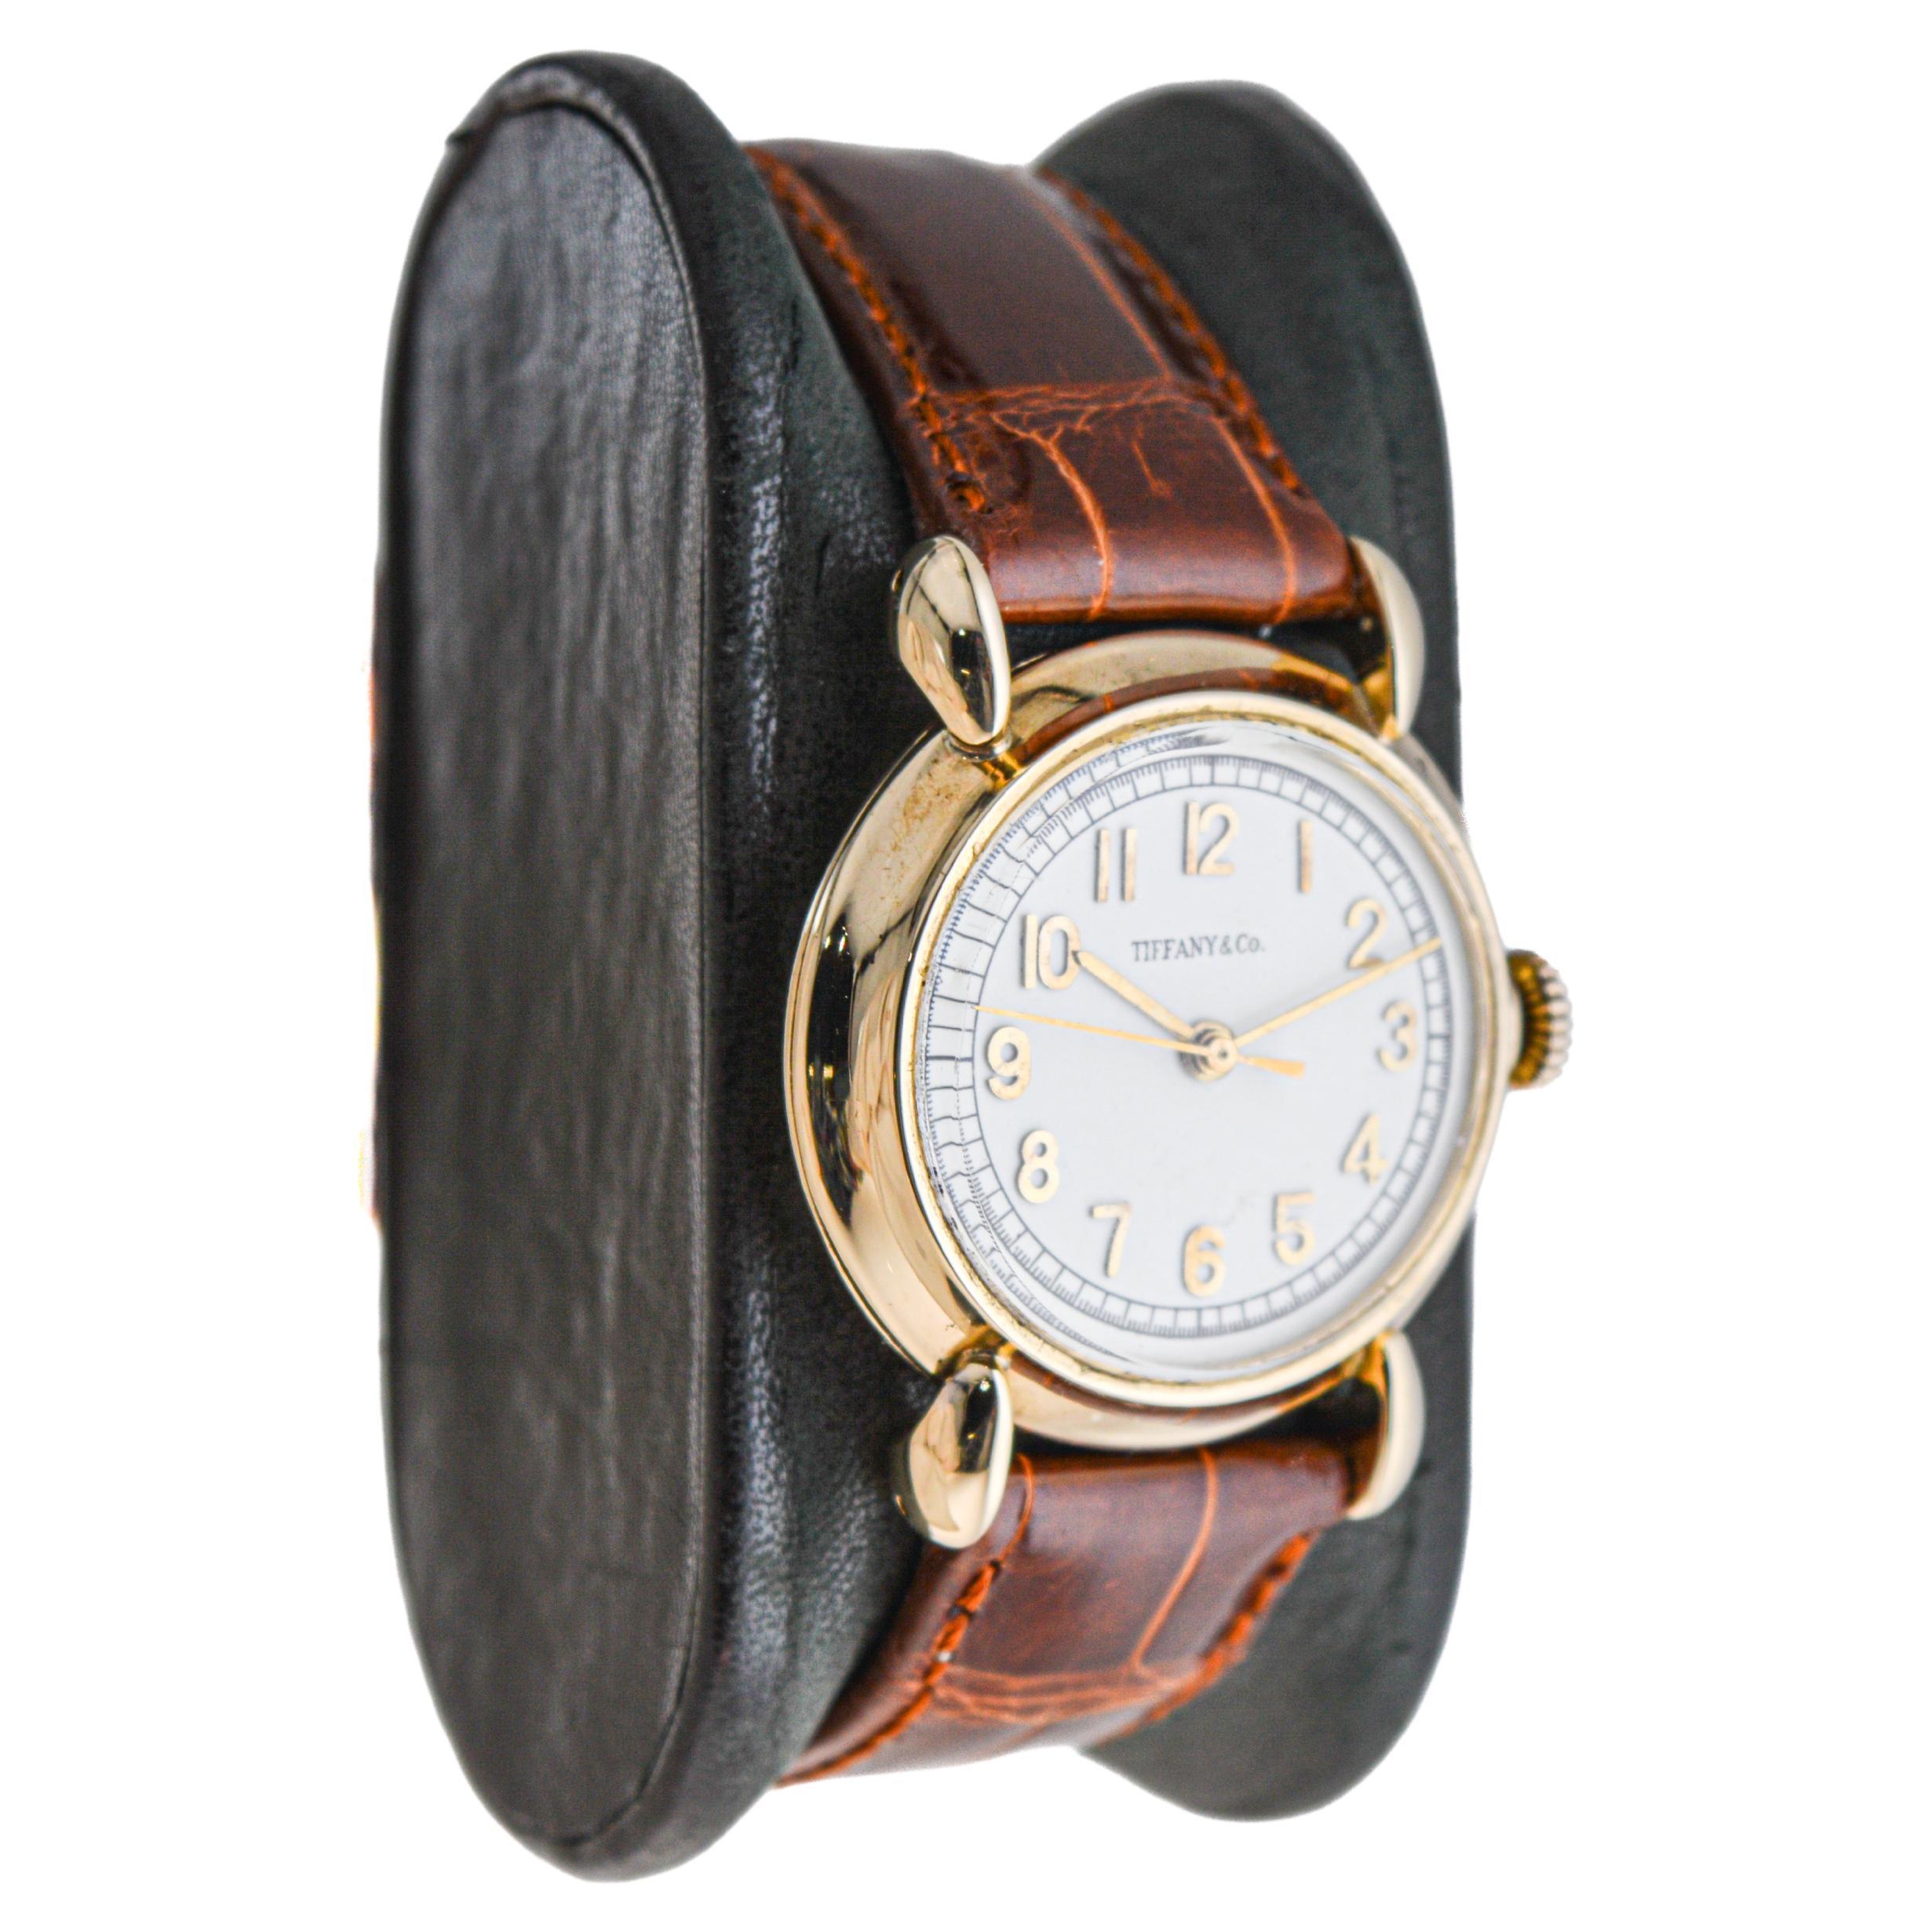 Tiffany & Co. by Schaffhausen International Watch Company Art Deco Style Watch For Sale 1